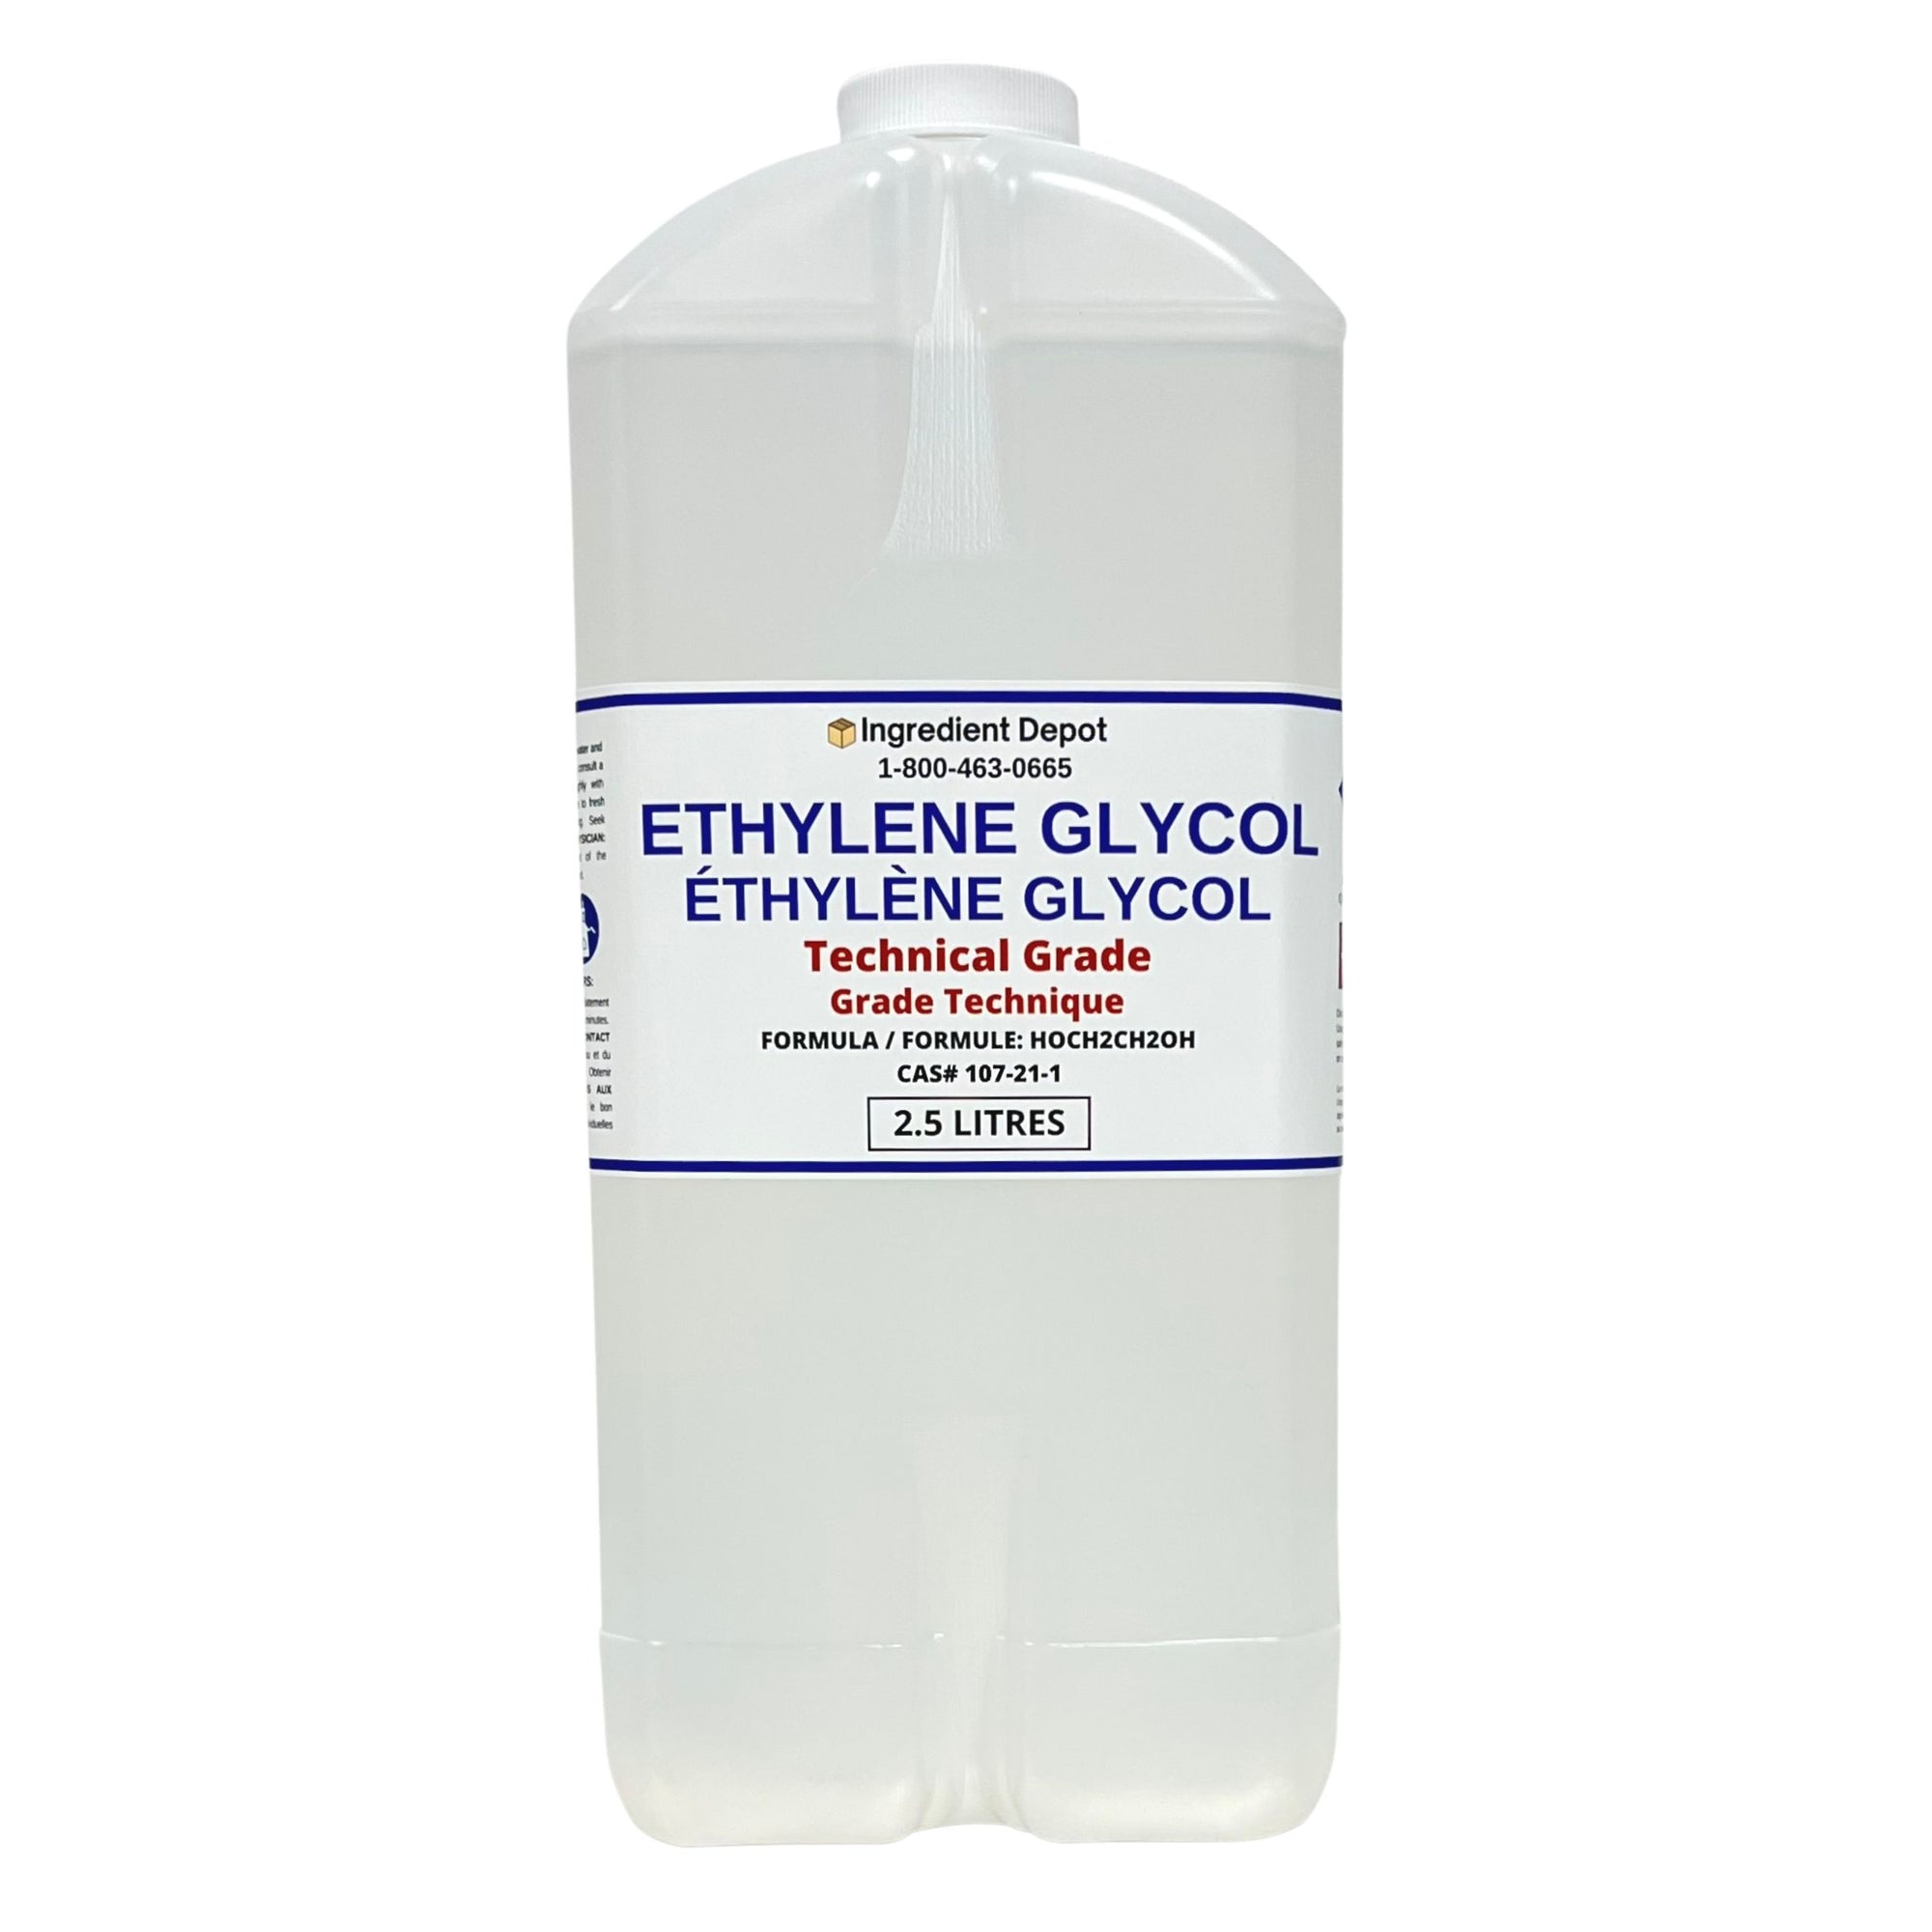 Ethylene Glycol Technical Grade 2.5 litres